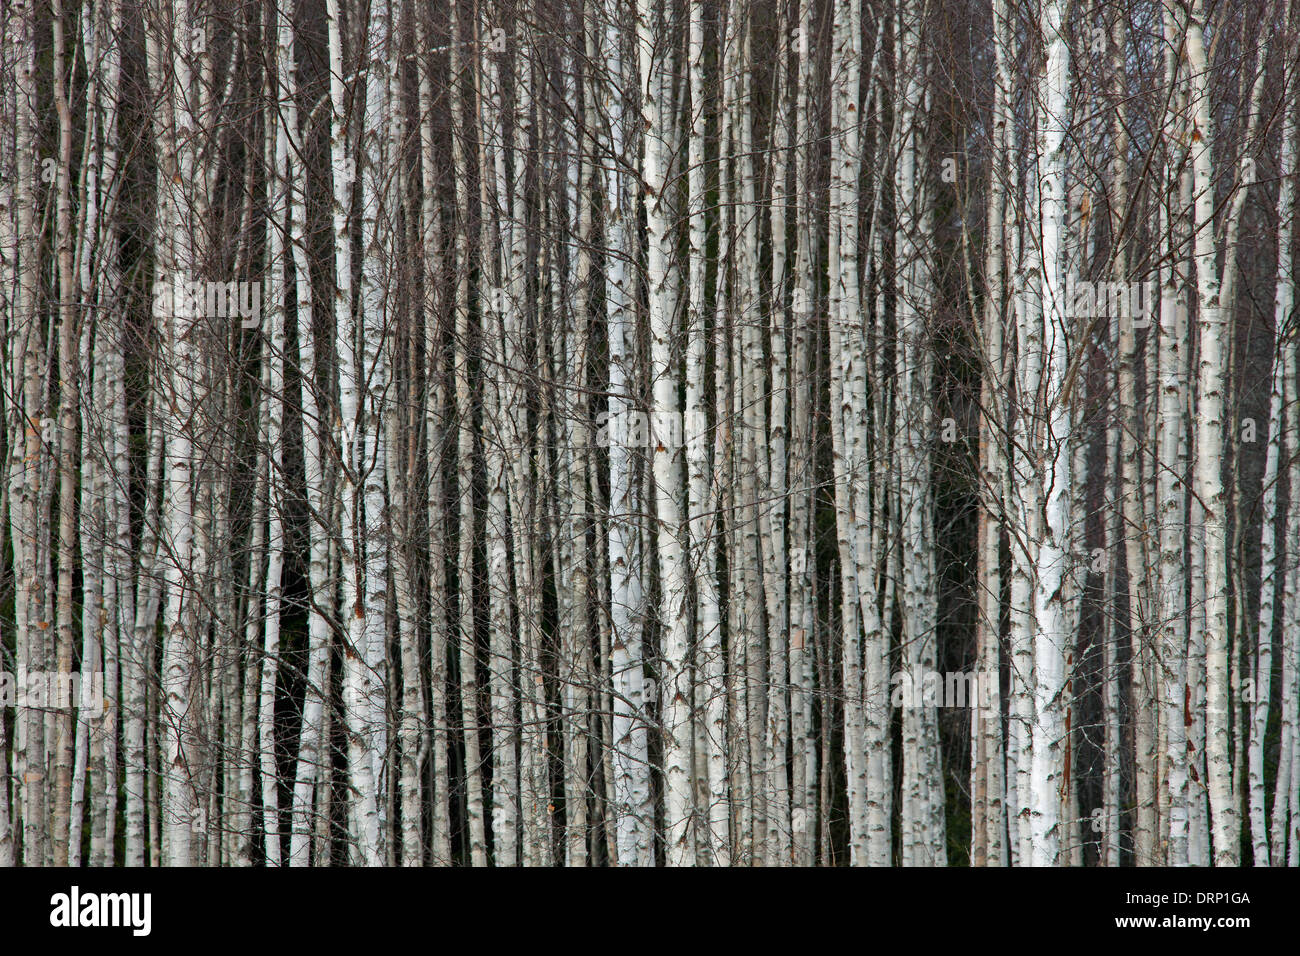 Tree trunks of Silver birch / common birch / white birches (Betula pendula / Betula alba) trees in forest, Sweden, Scandinavia Stock Photo